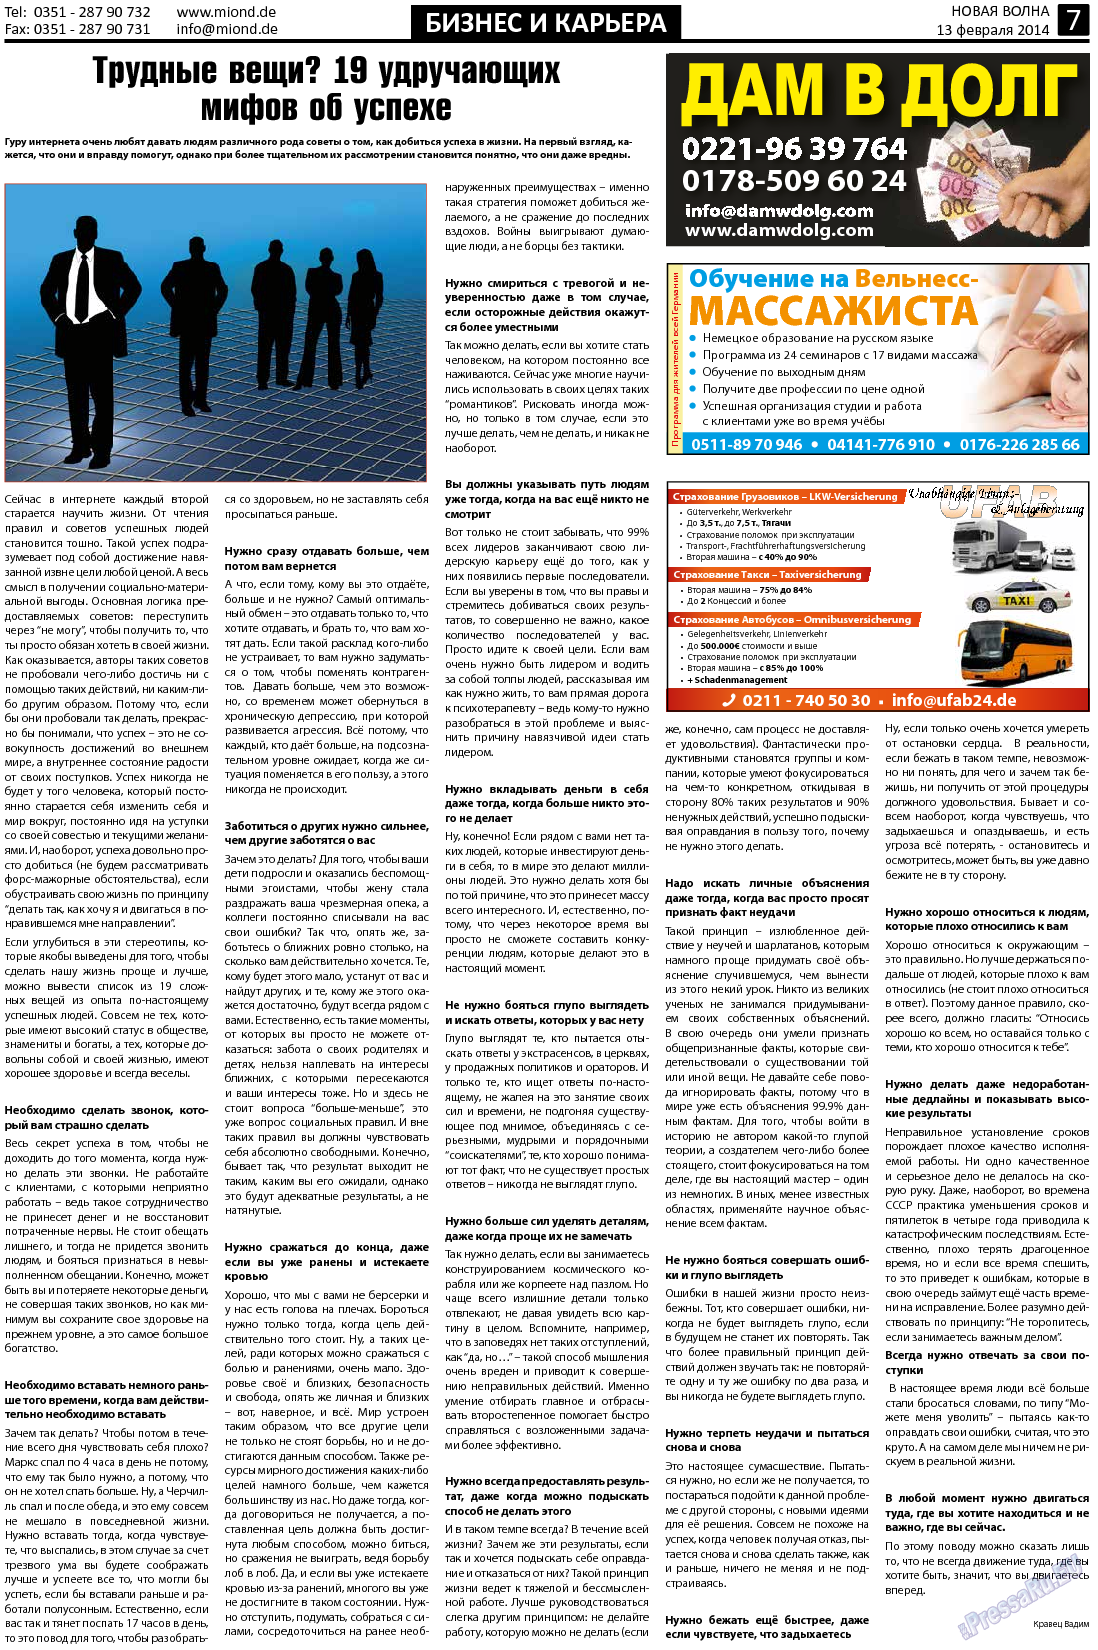 Новая Wолна, газета. 2014 №7 стр.7